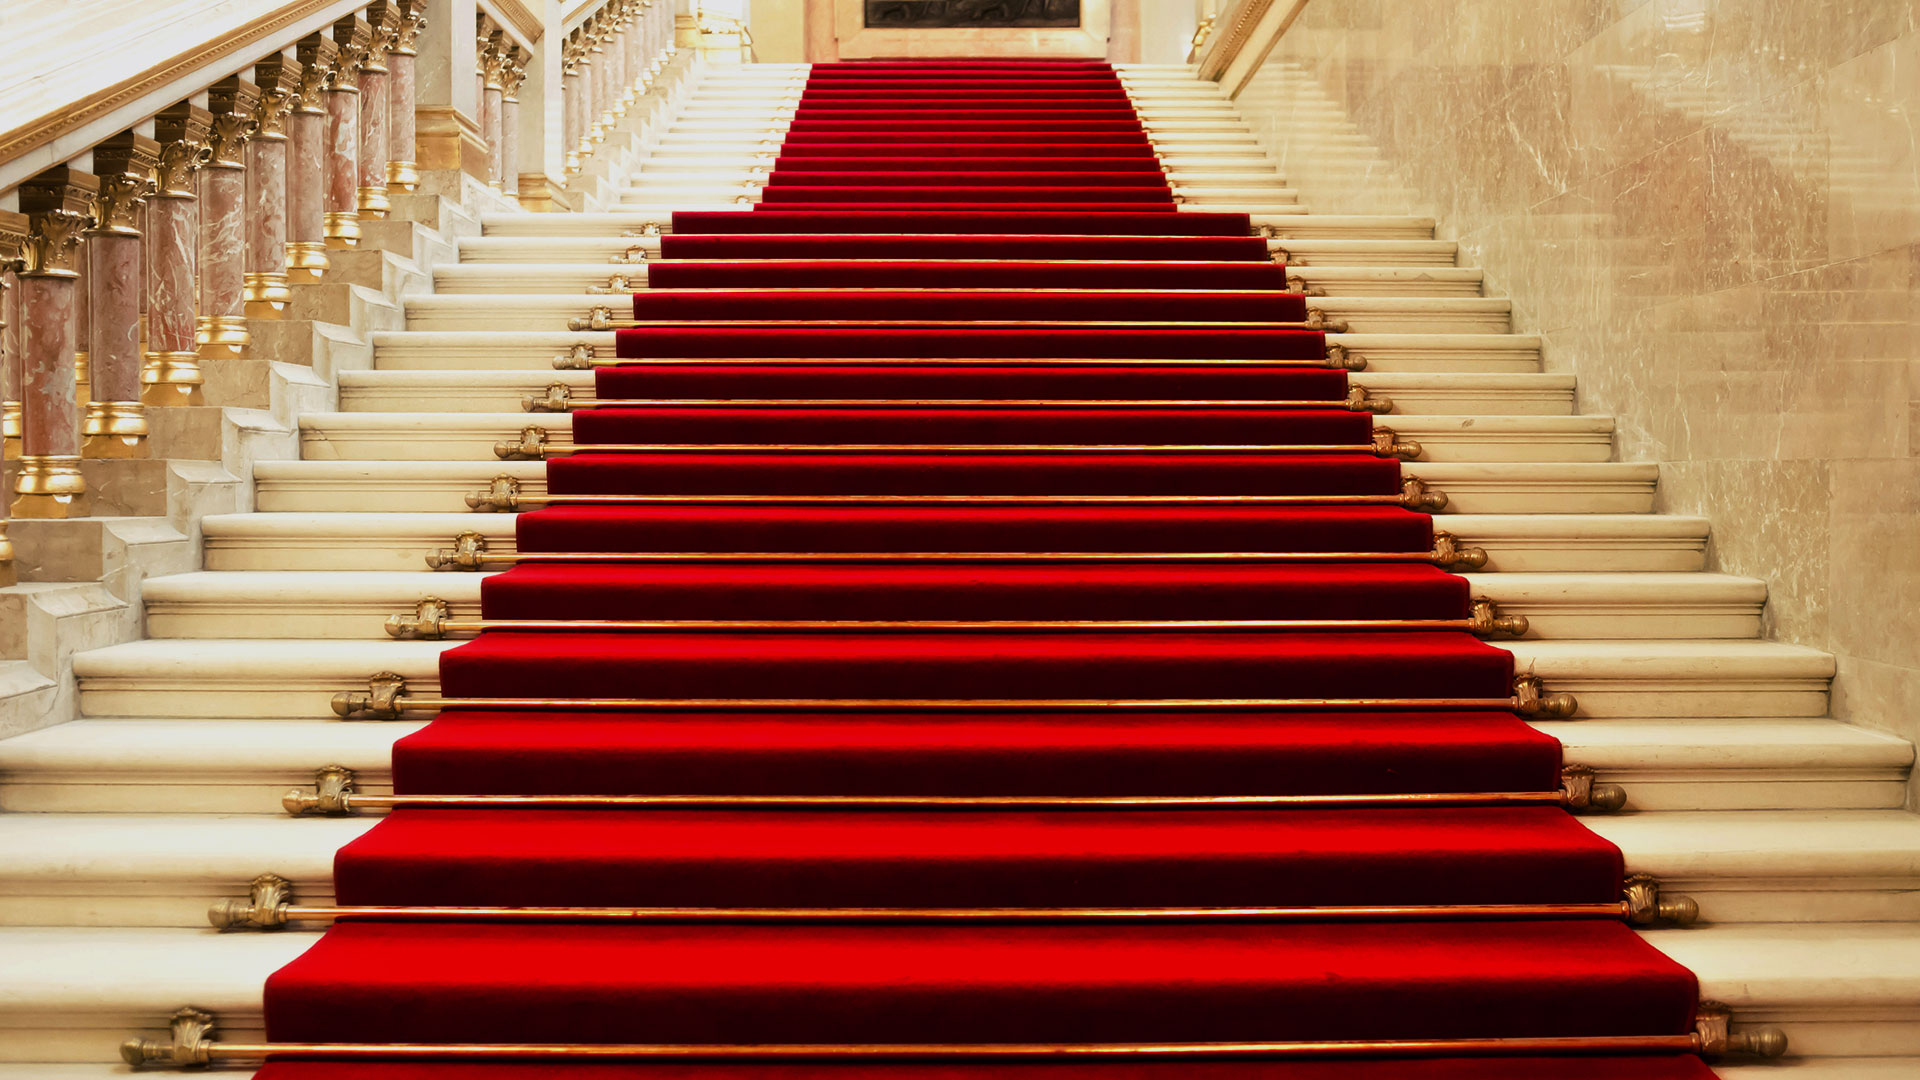 vip wallpaper,stairs,red,architecture,handrail,interior design